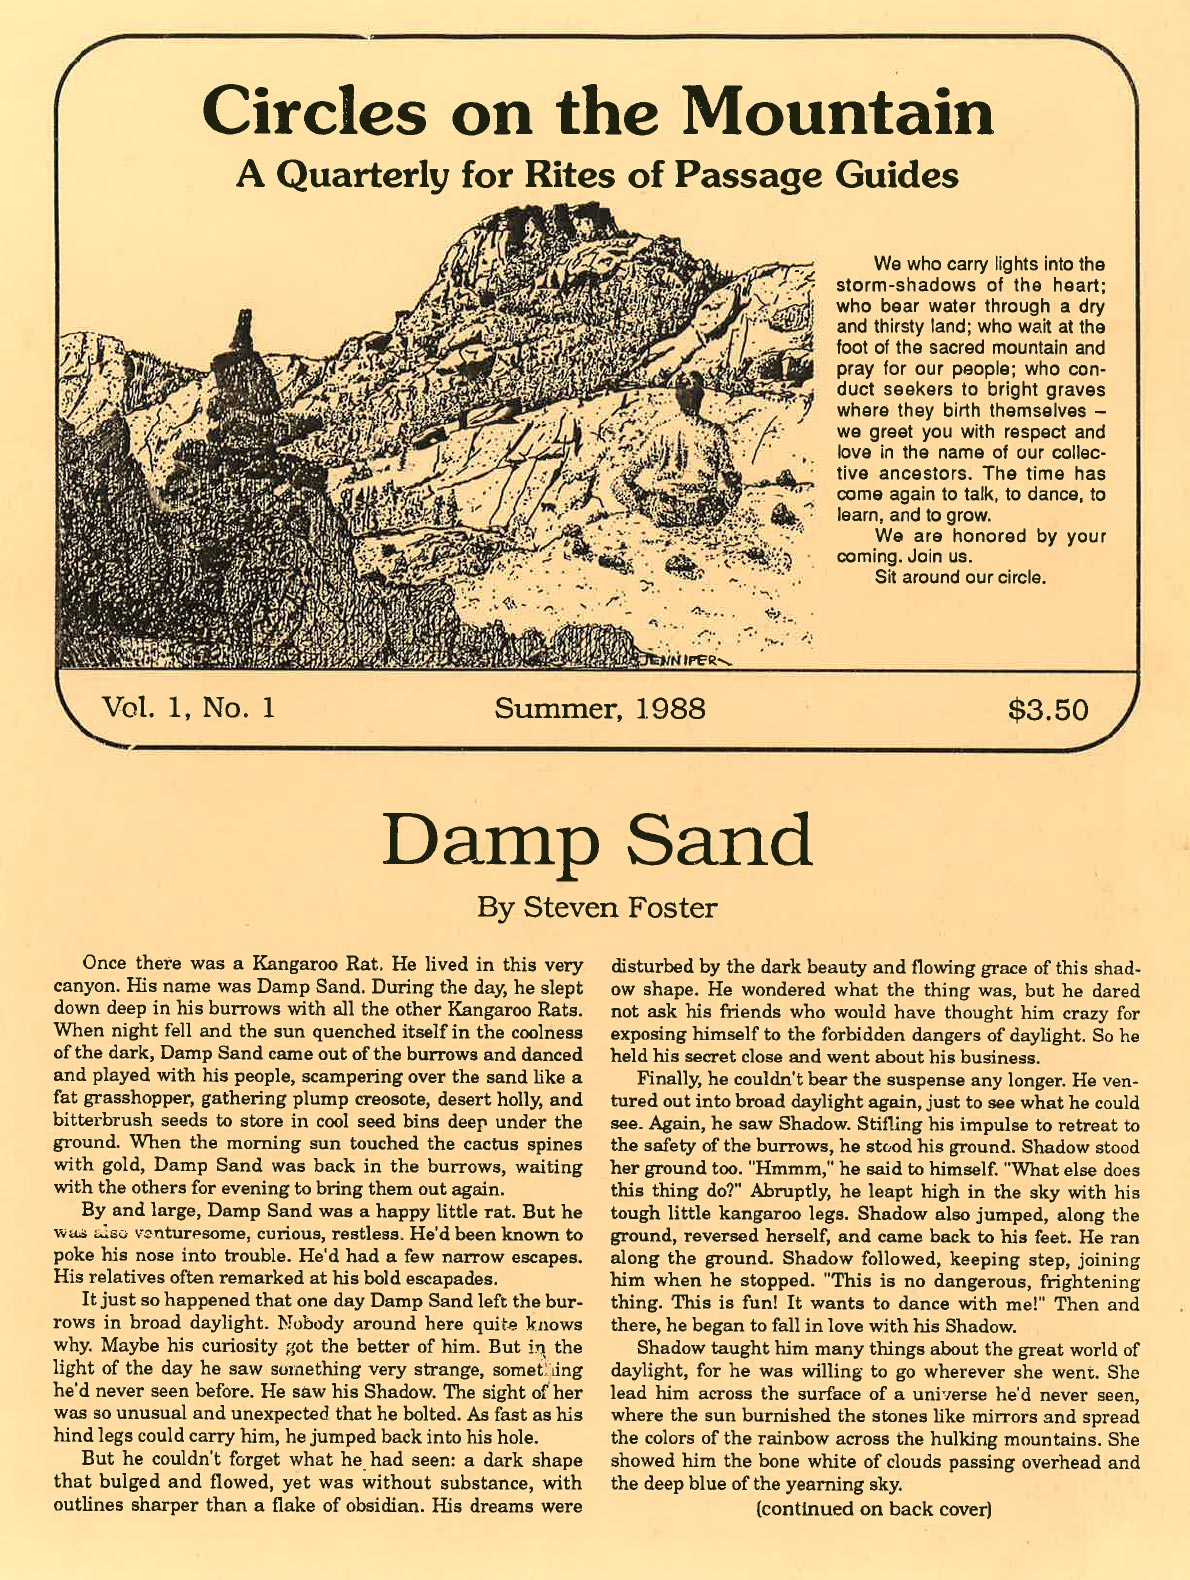 1988: Damp Sand